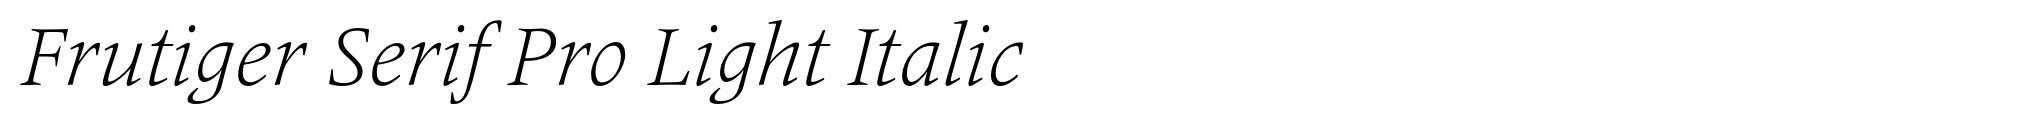 Frutiger Serif Pro Light Italic image